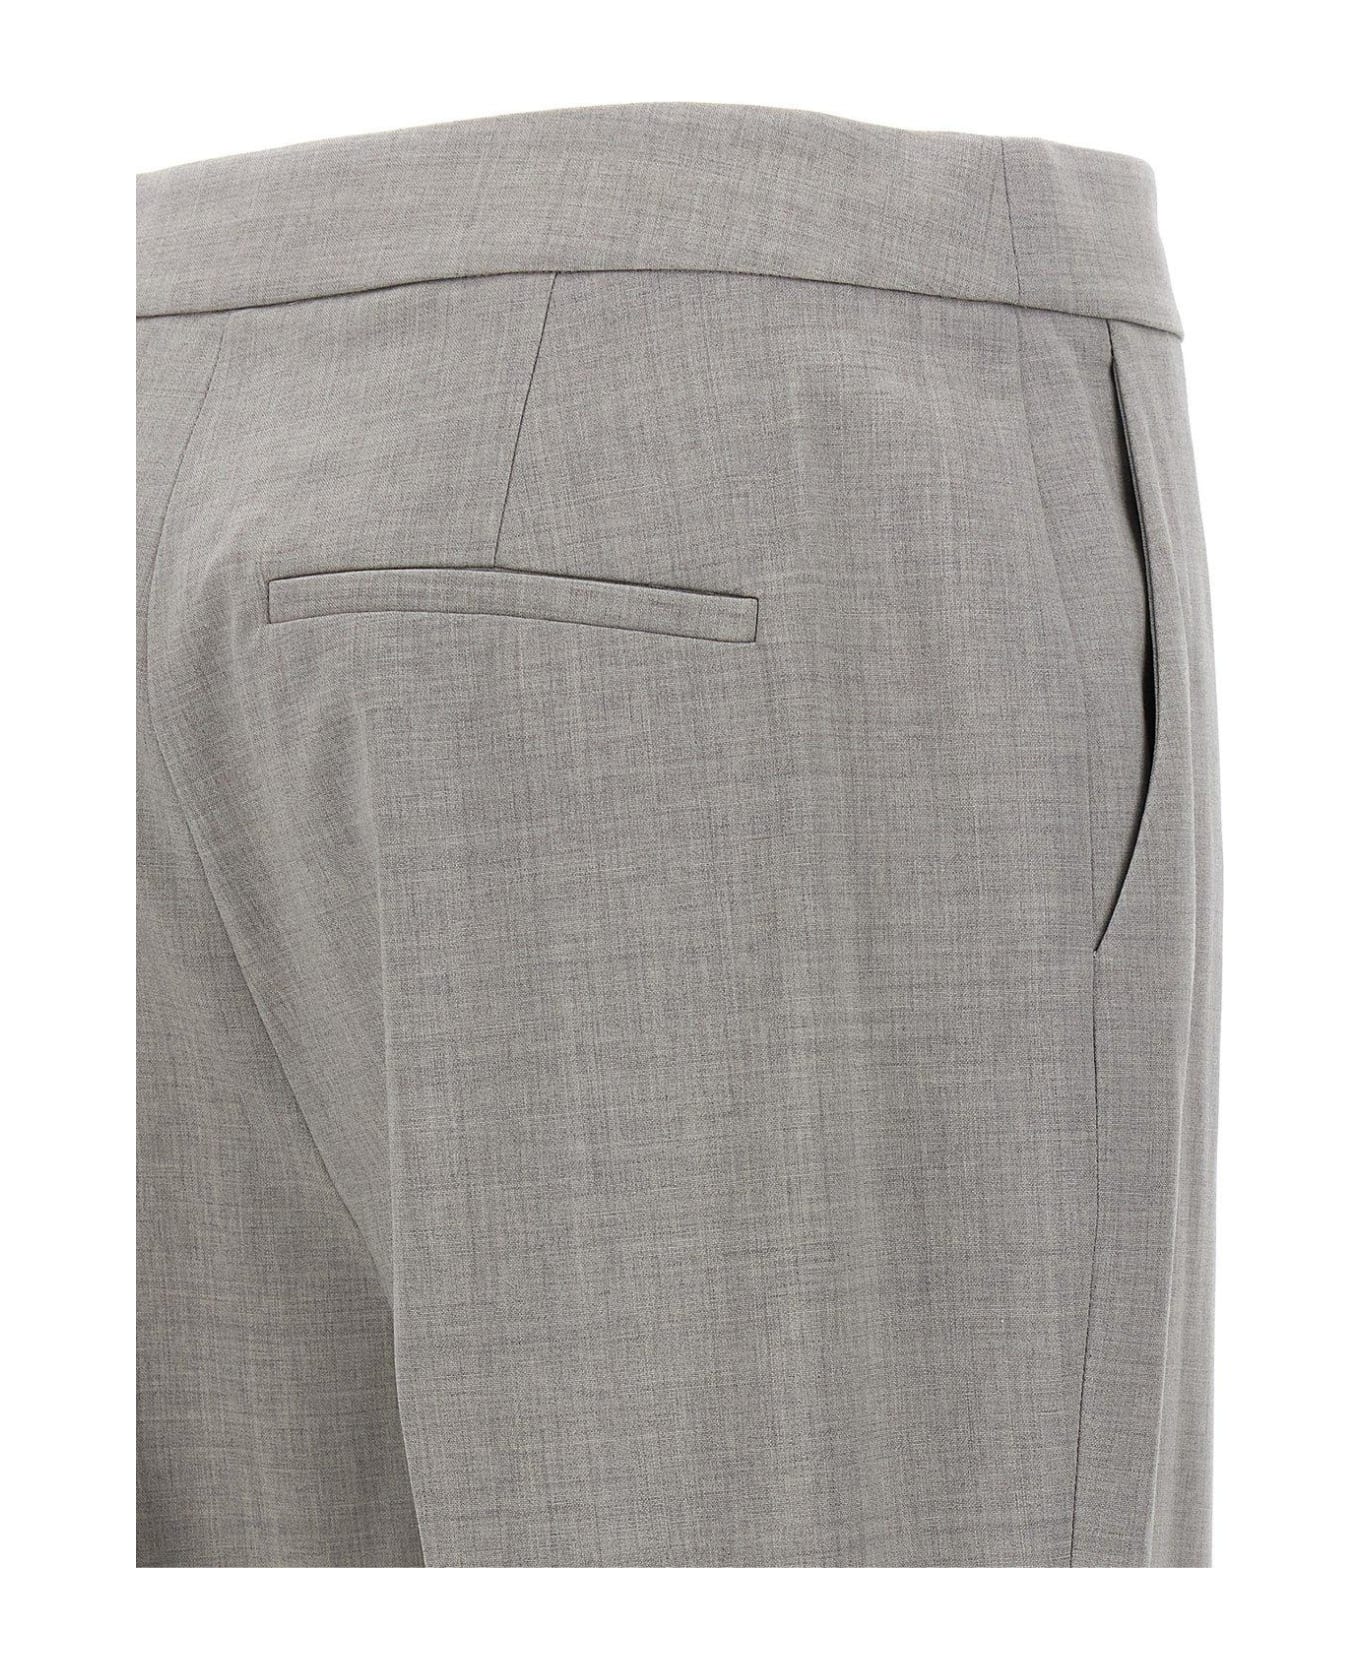 Theory Treeca Straight-leg Tailored Pants - Grey